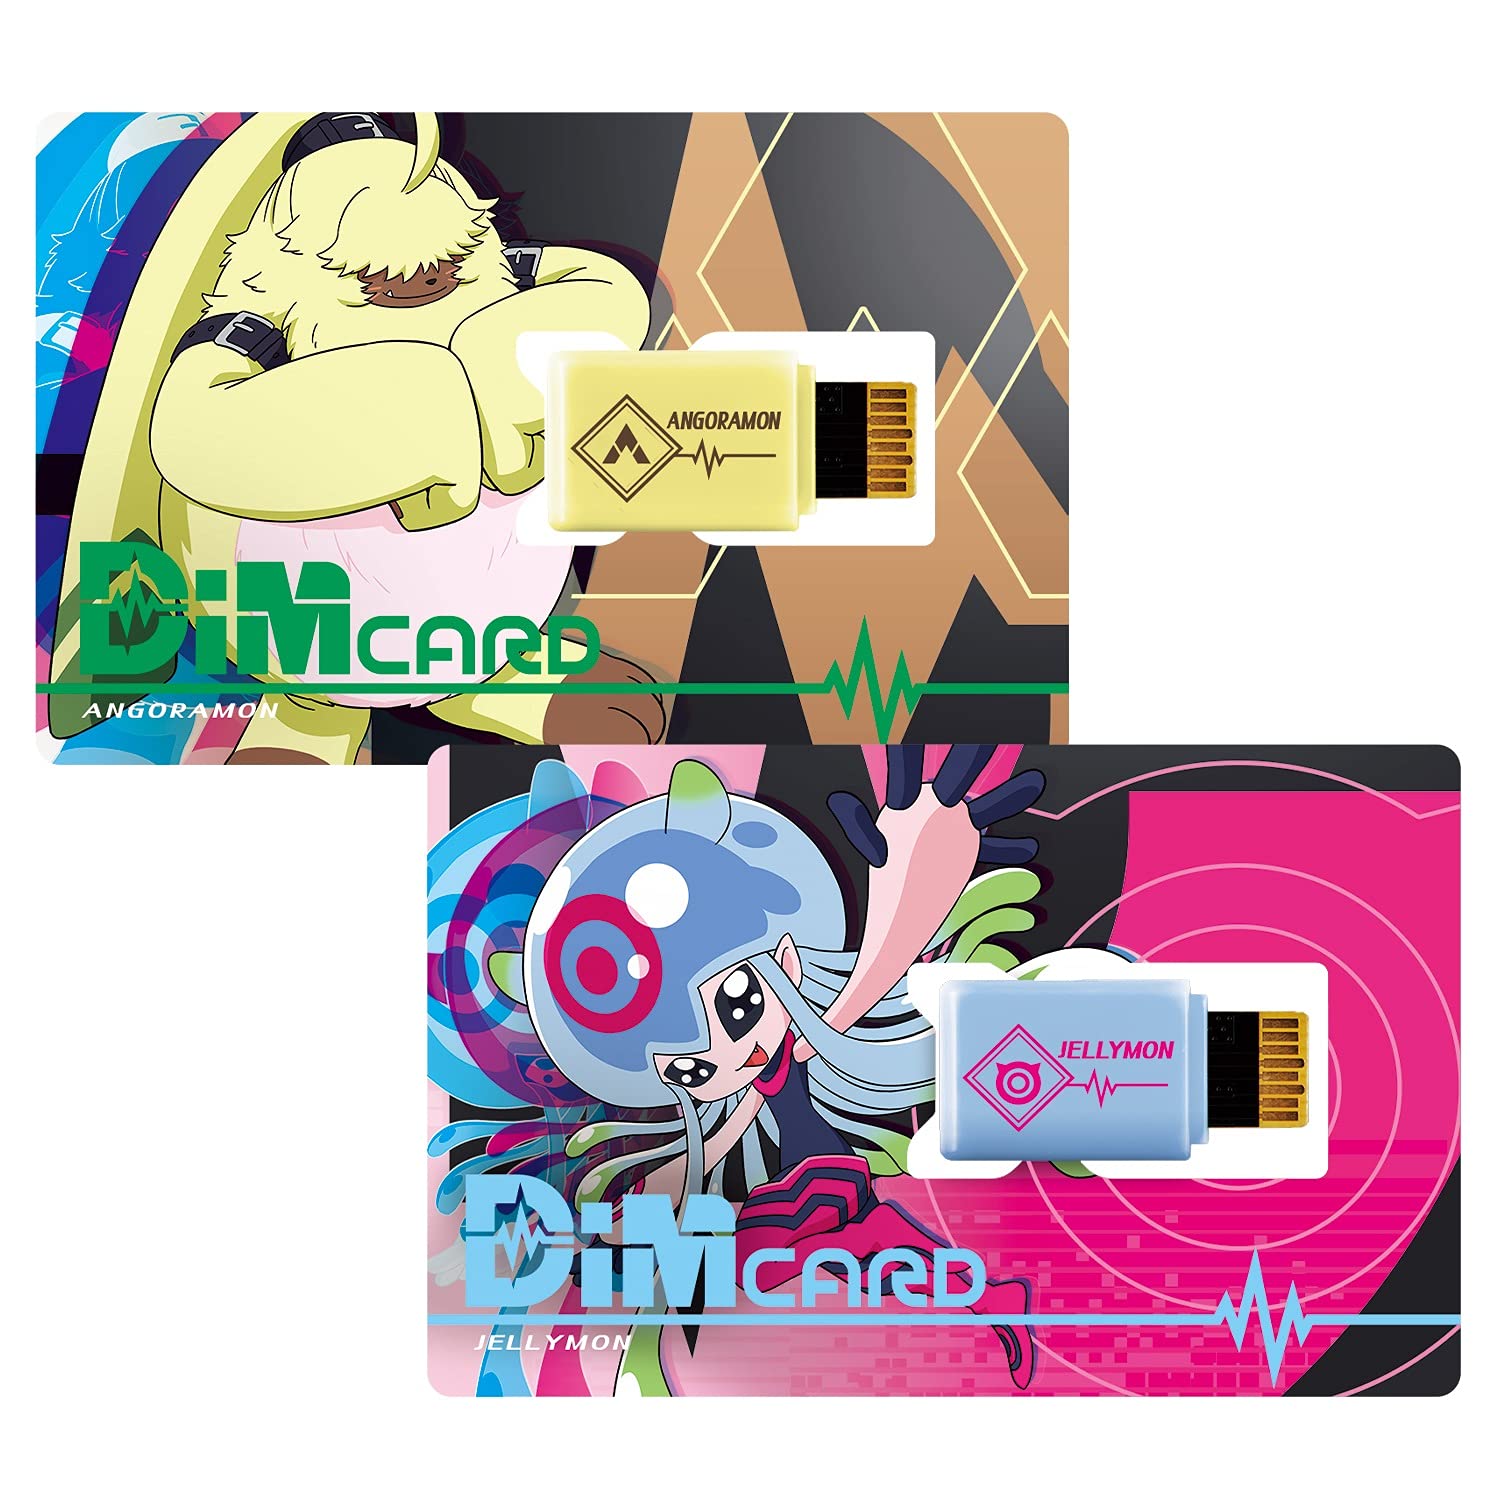 Populaire Bandai Vital Bracelet Digital Monster Dim Card V2 Angoramon & Jerimon ooj8ltDYY mode